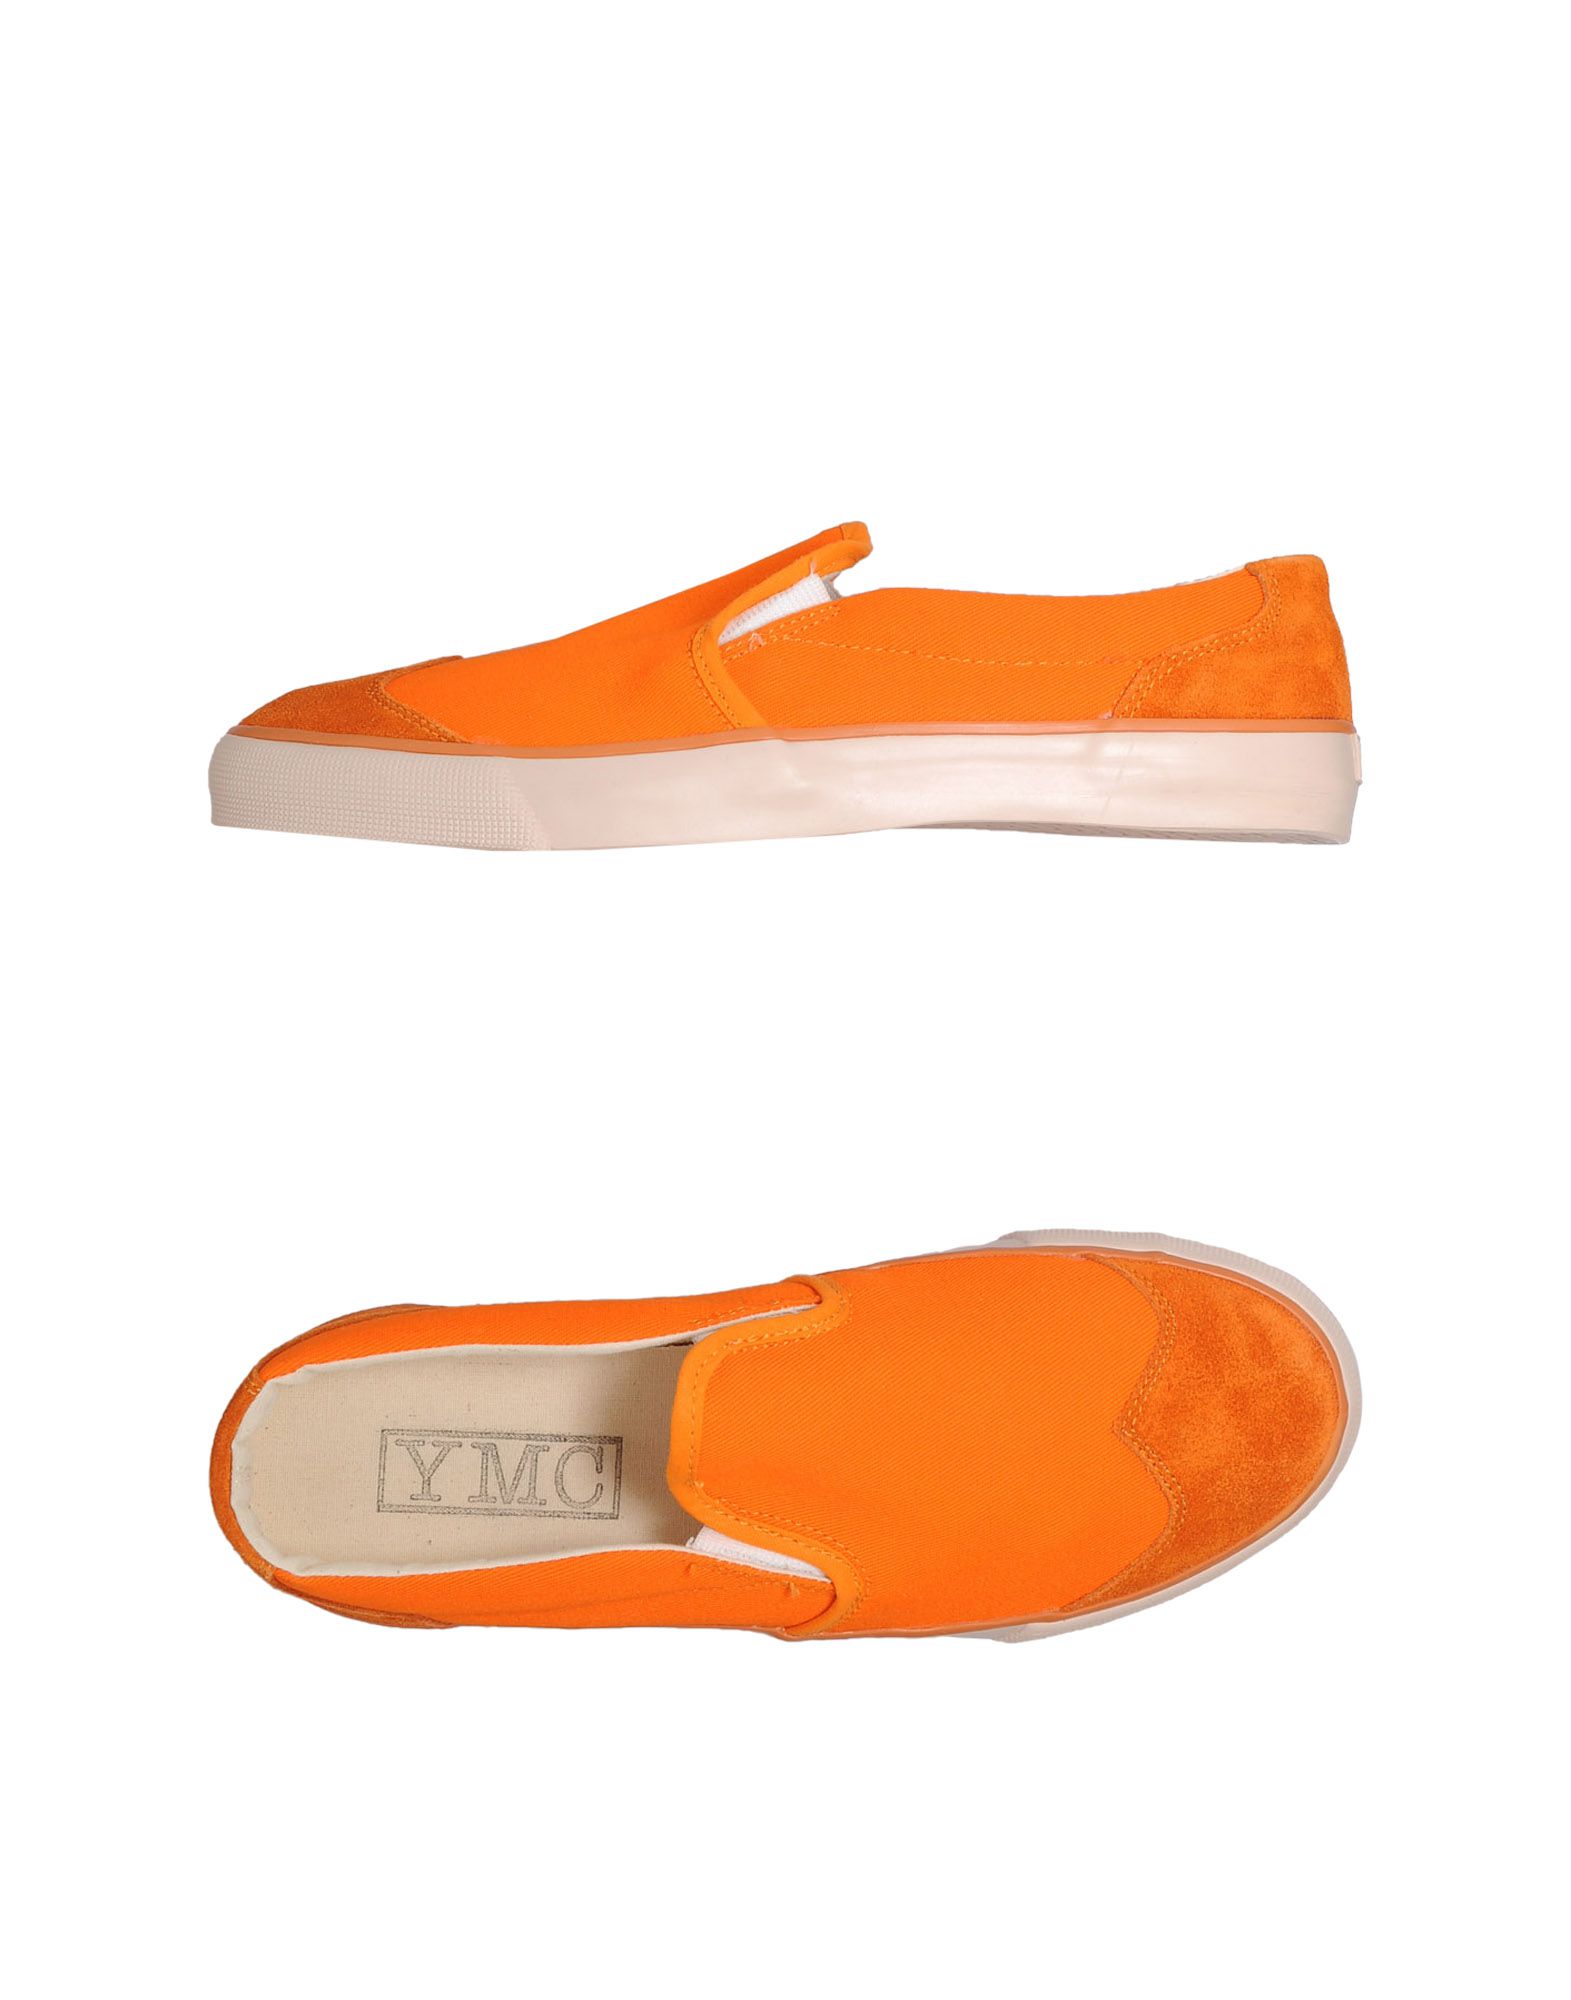 Foto Ymc You Must Create Sneakers Slip On Hombre Naranja